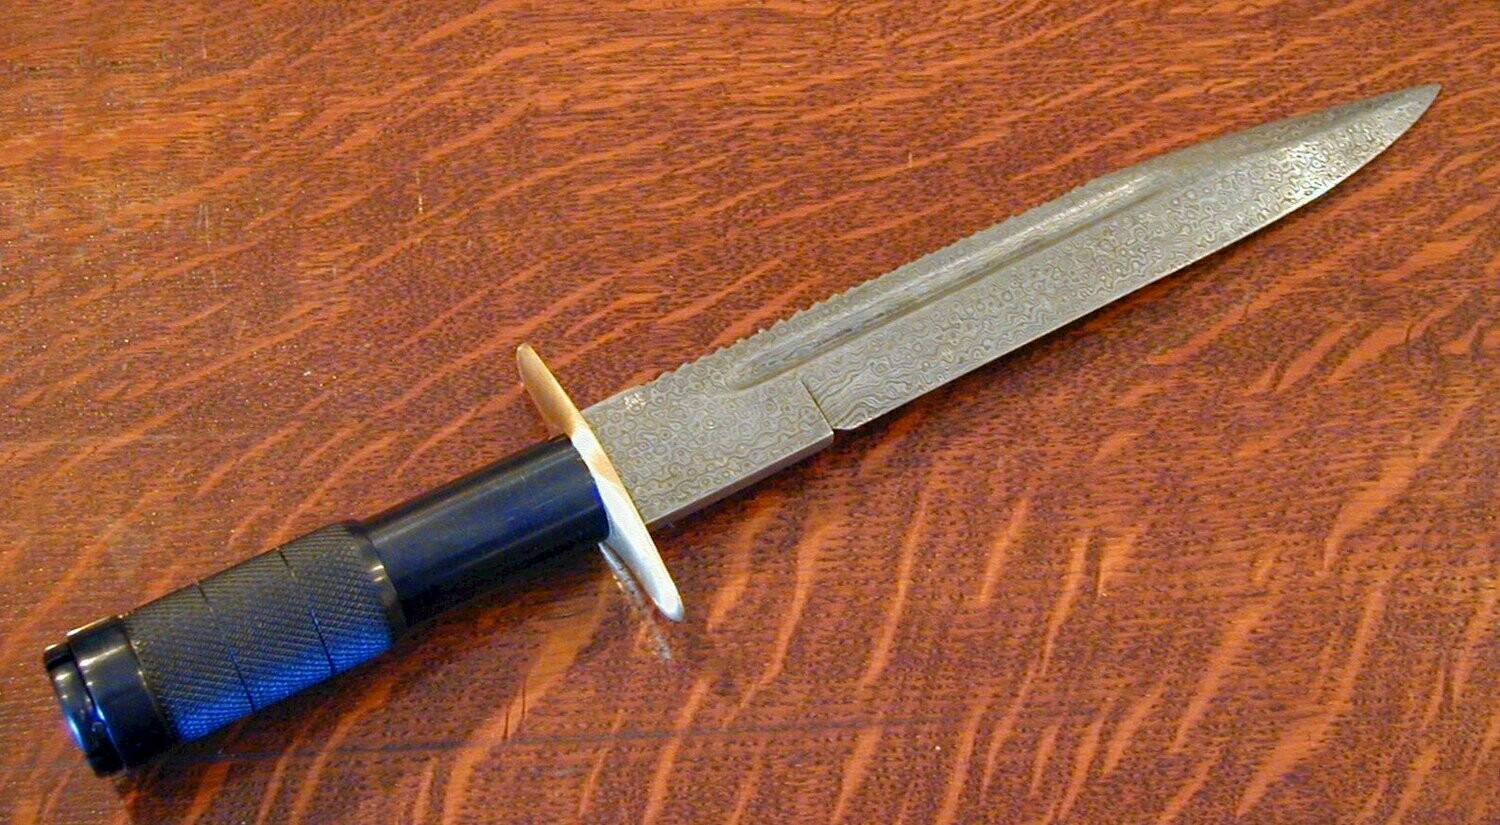 Baldock Spear Knife